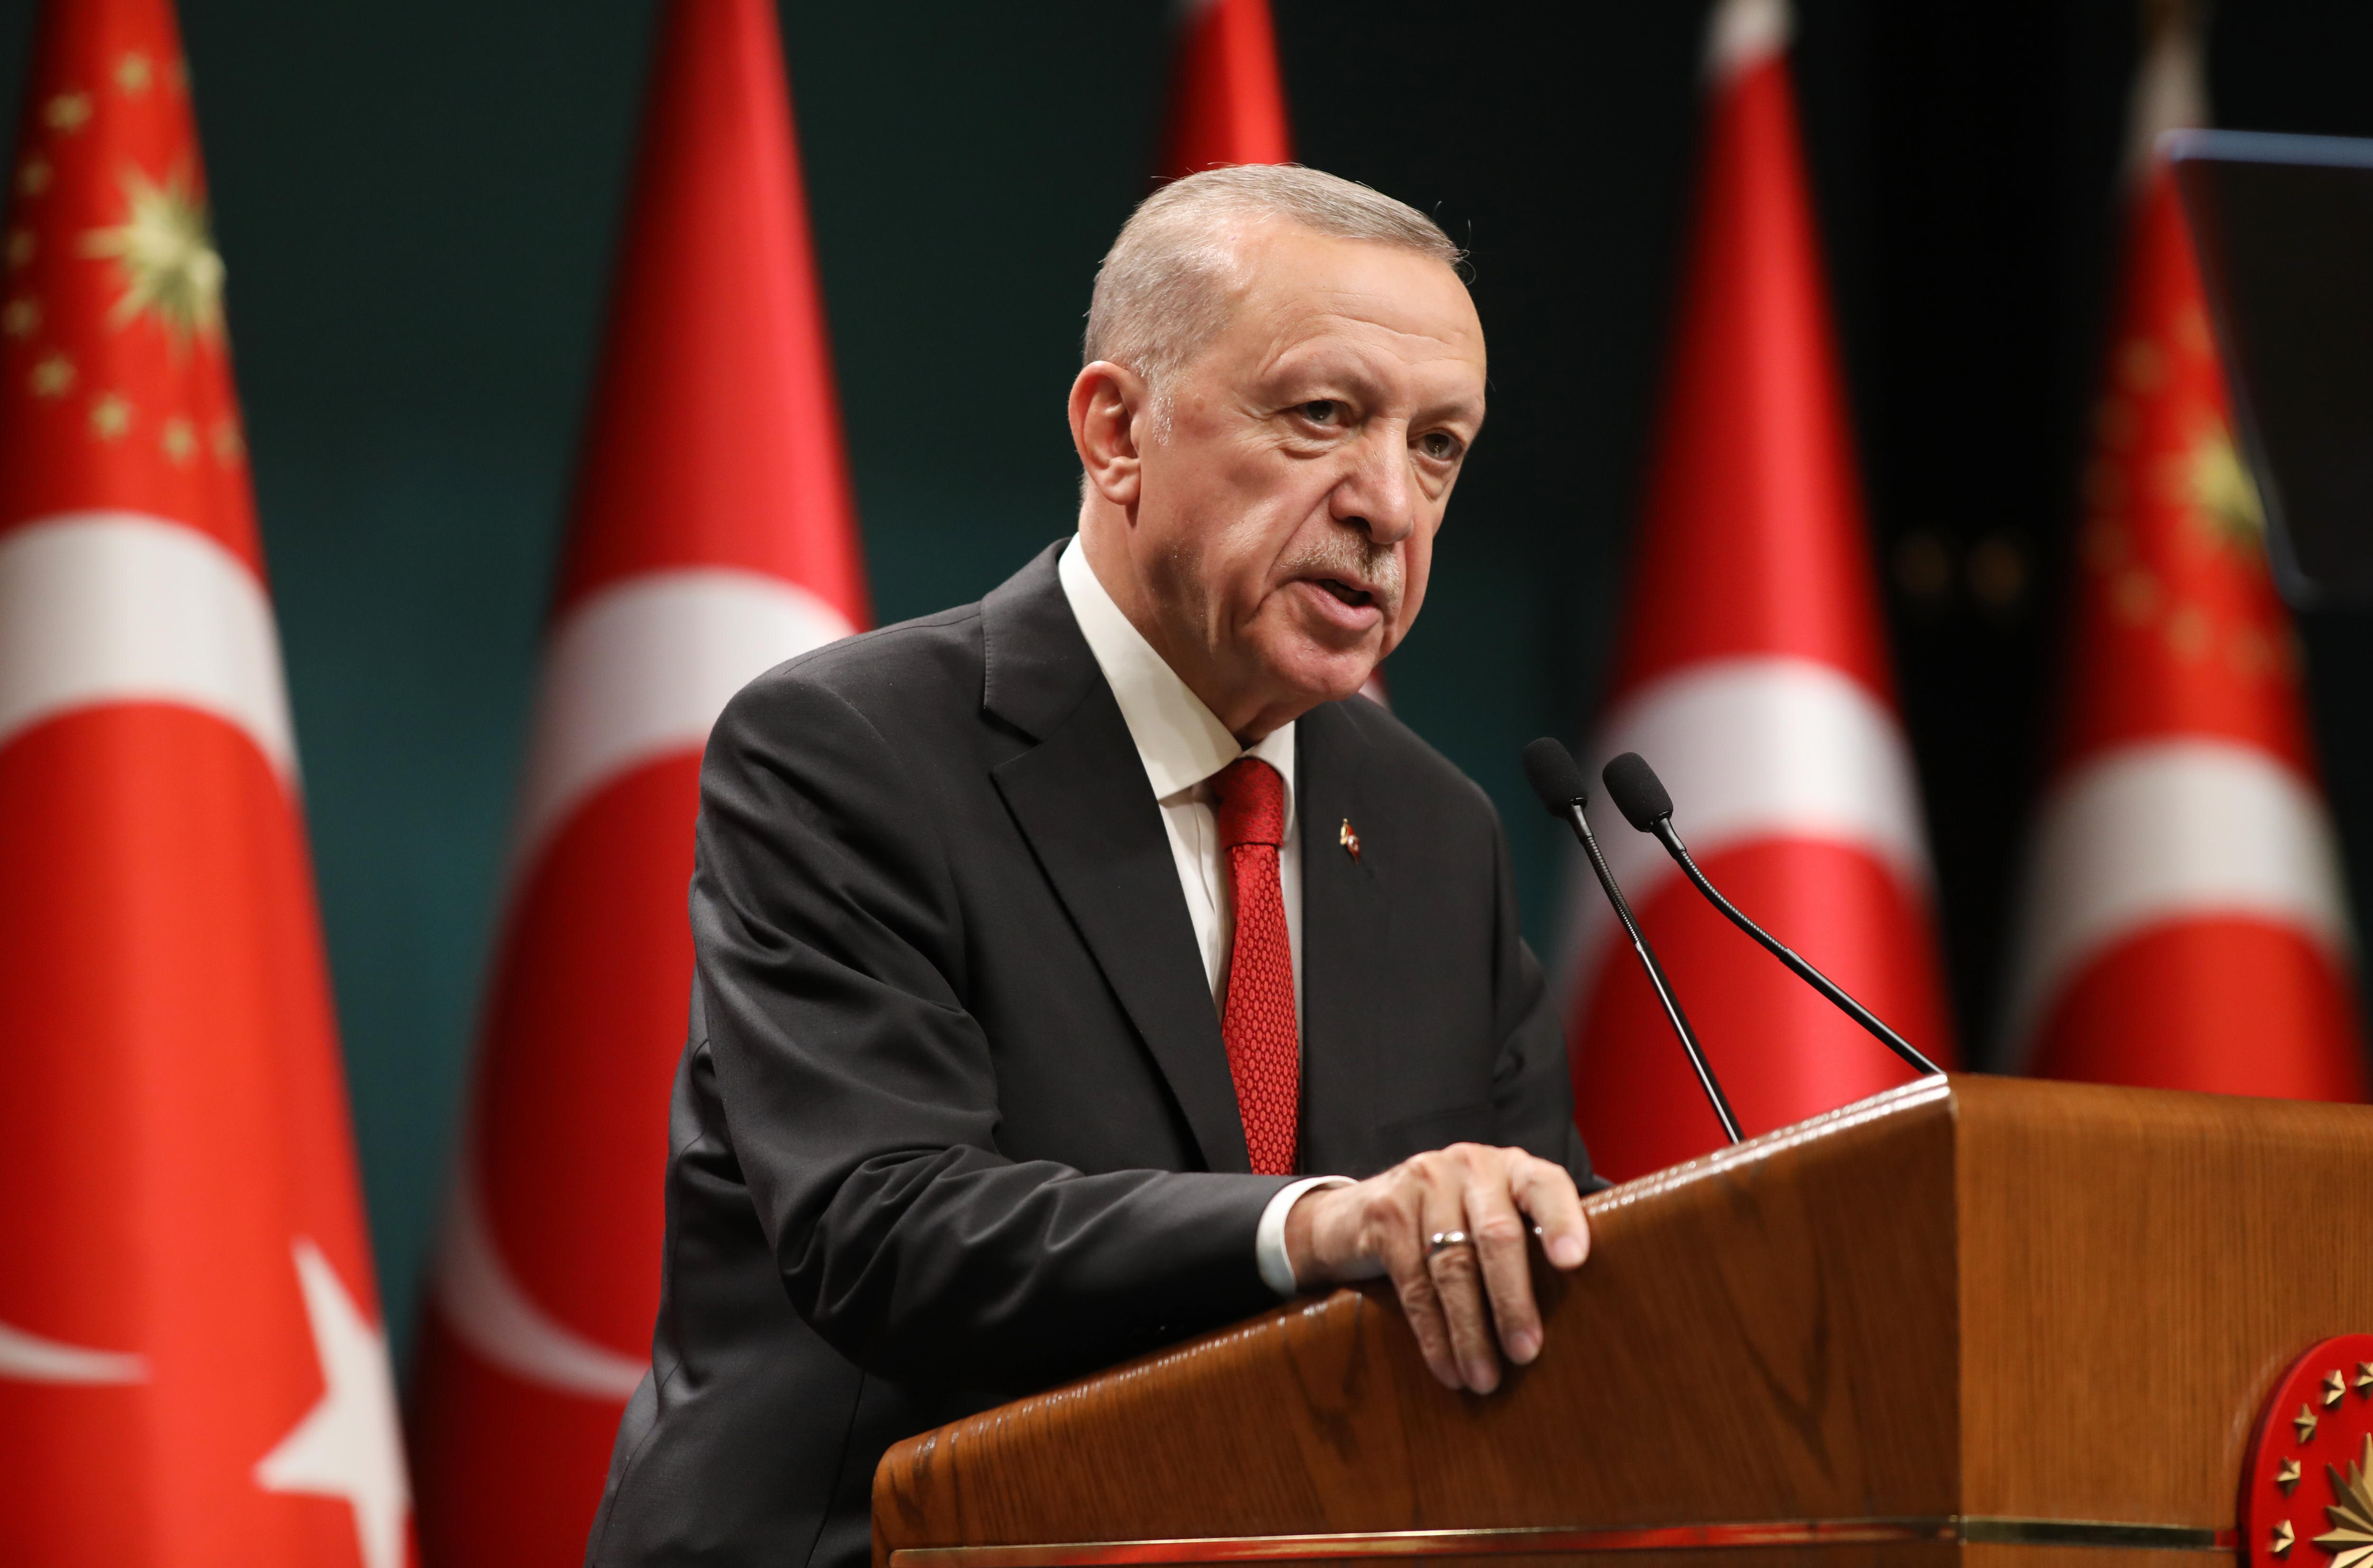 Question raised over Erdogan's re-election